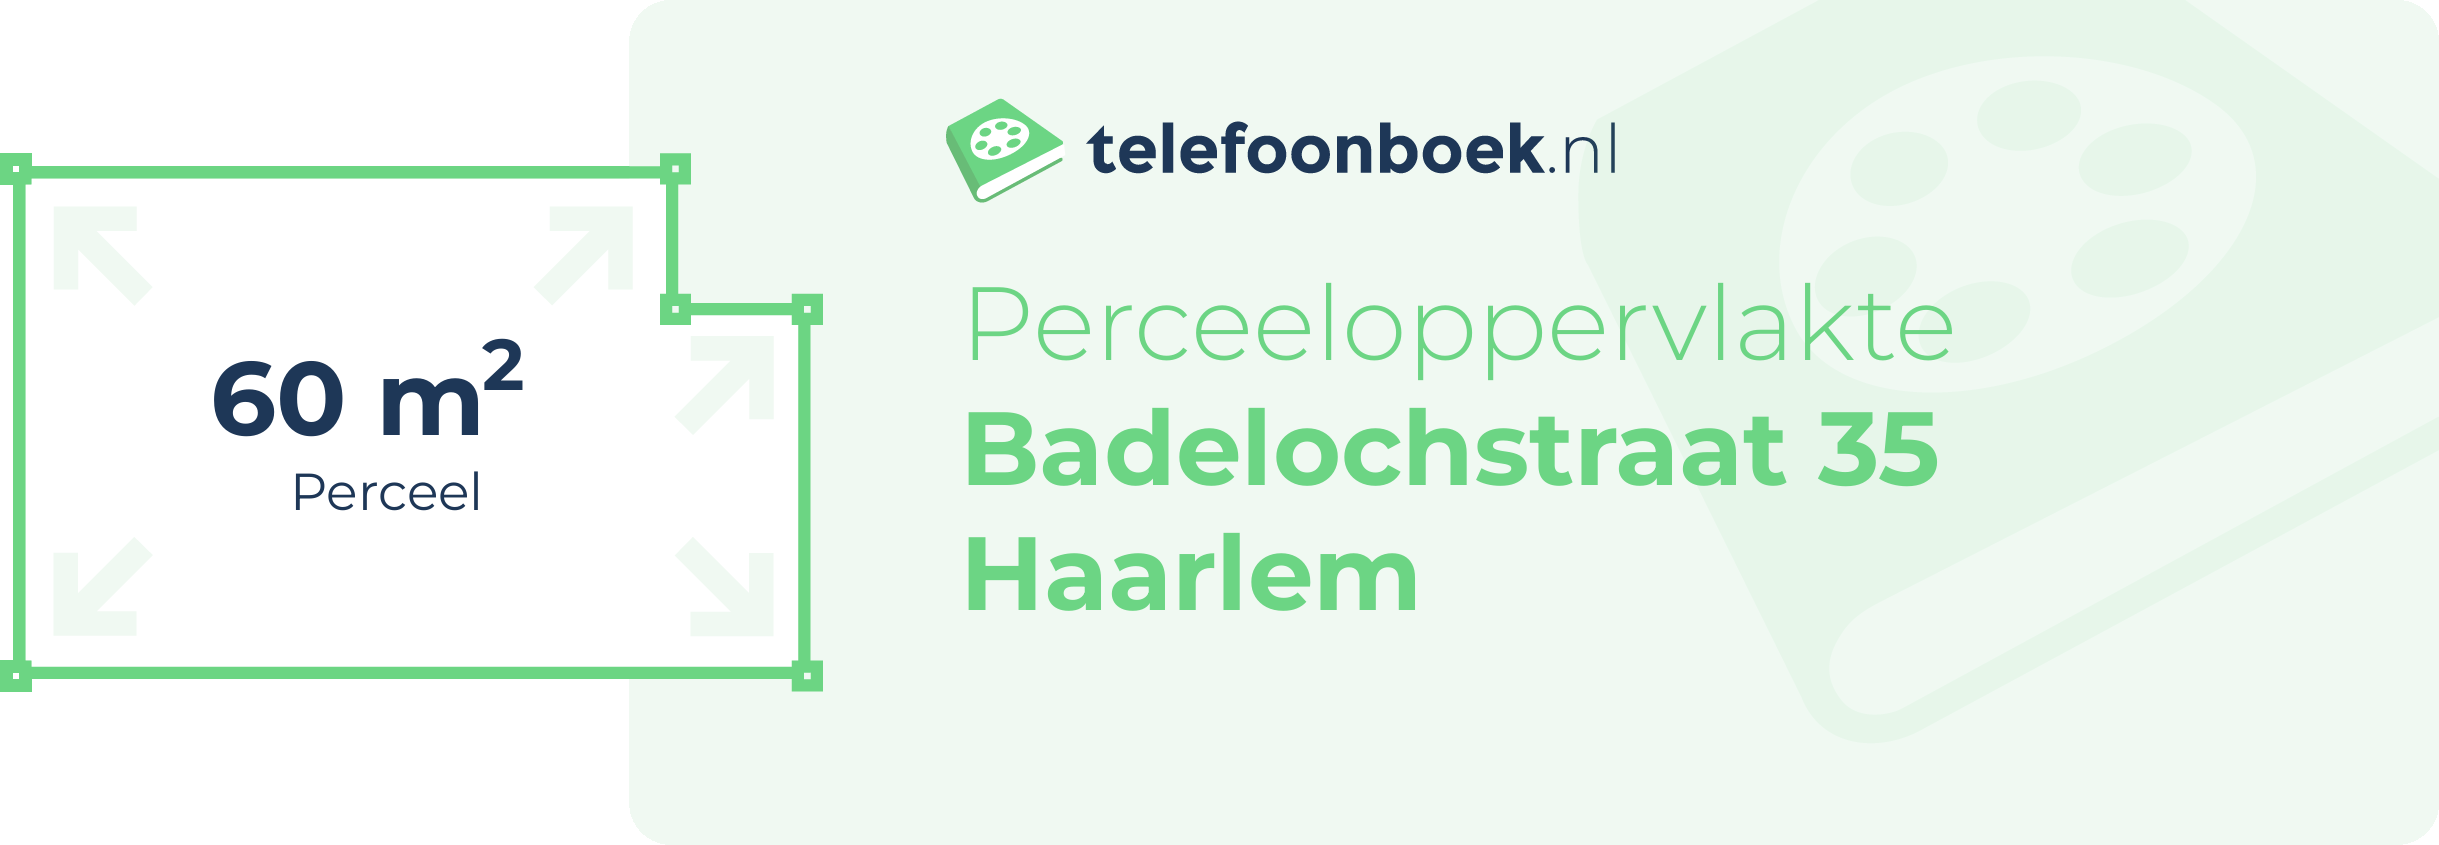 Perceeloppervlakte Badelochstraat 35 Haarlem